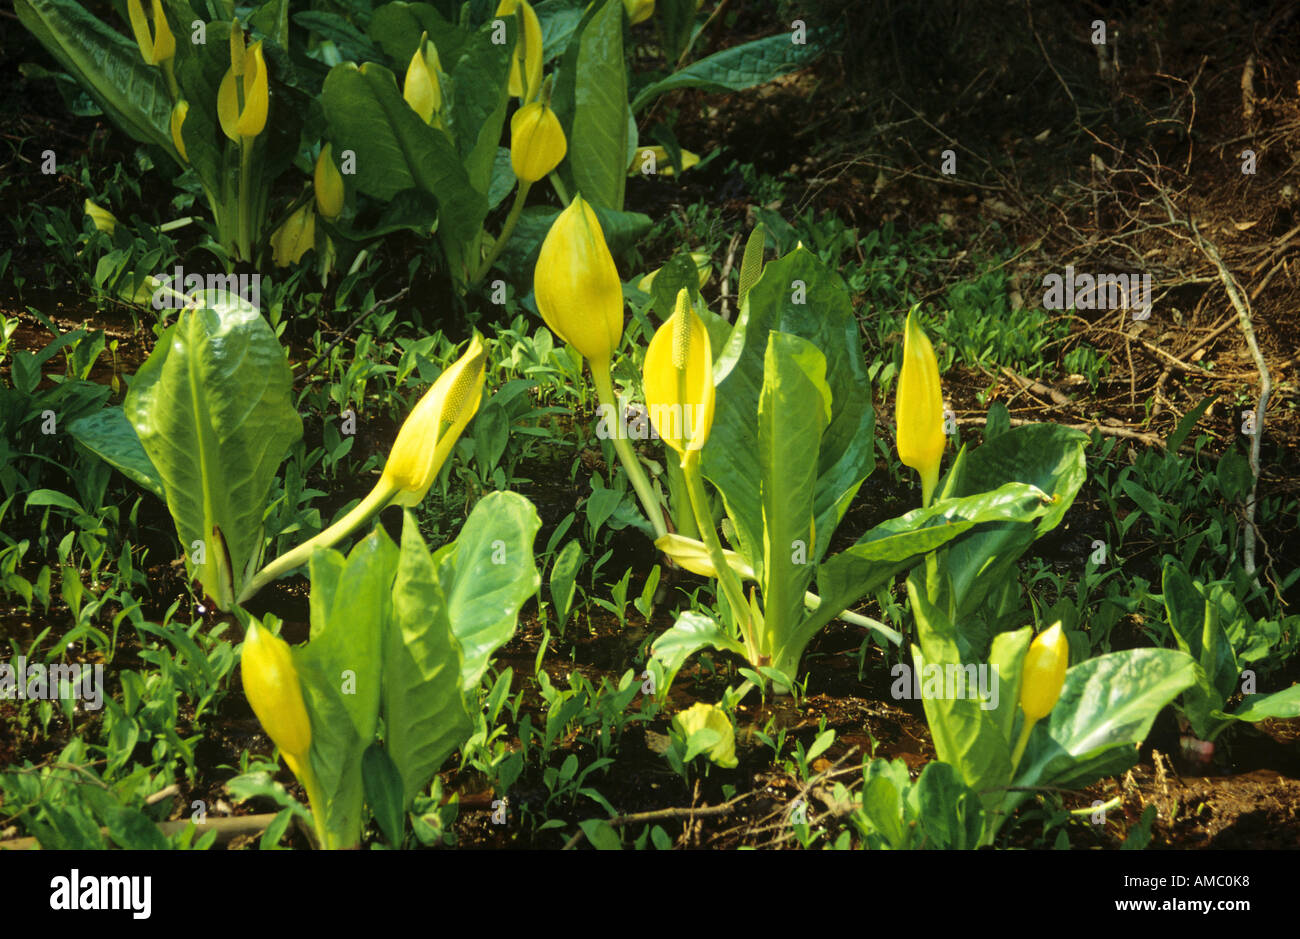 Skunk cabbage / Lysichiton americanum Stock Photo